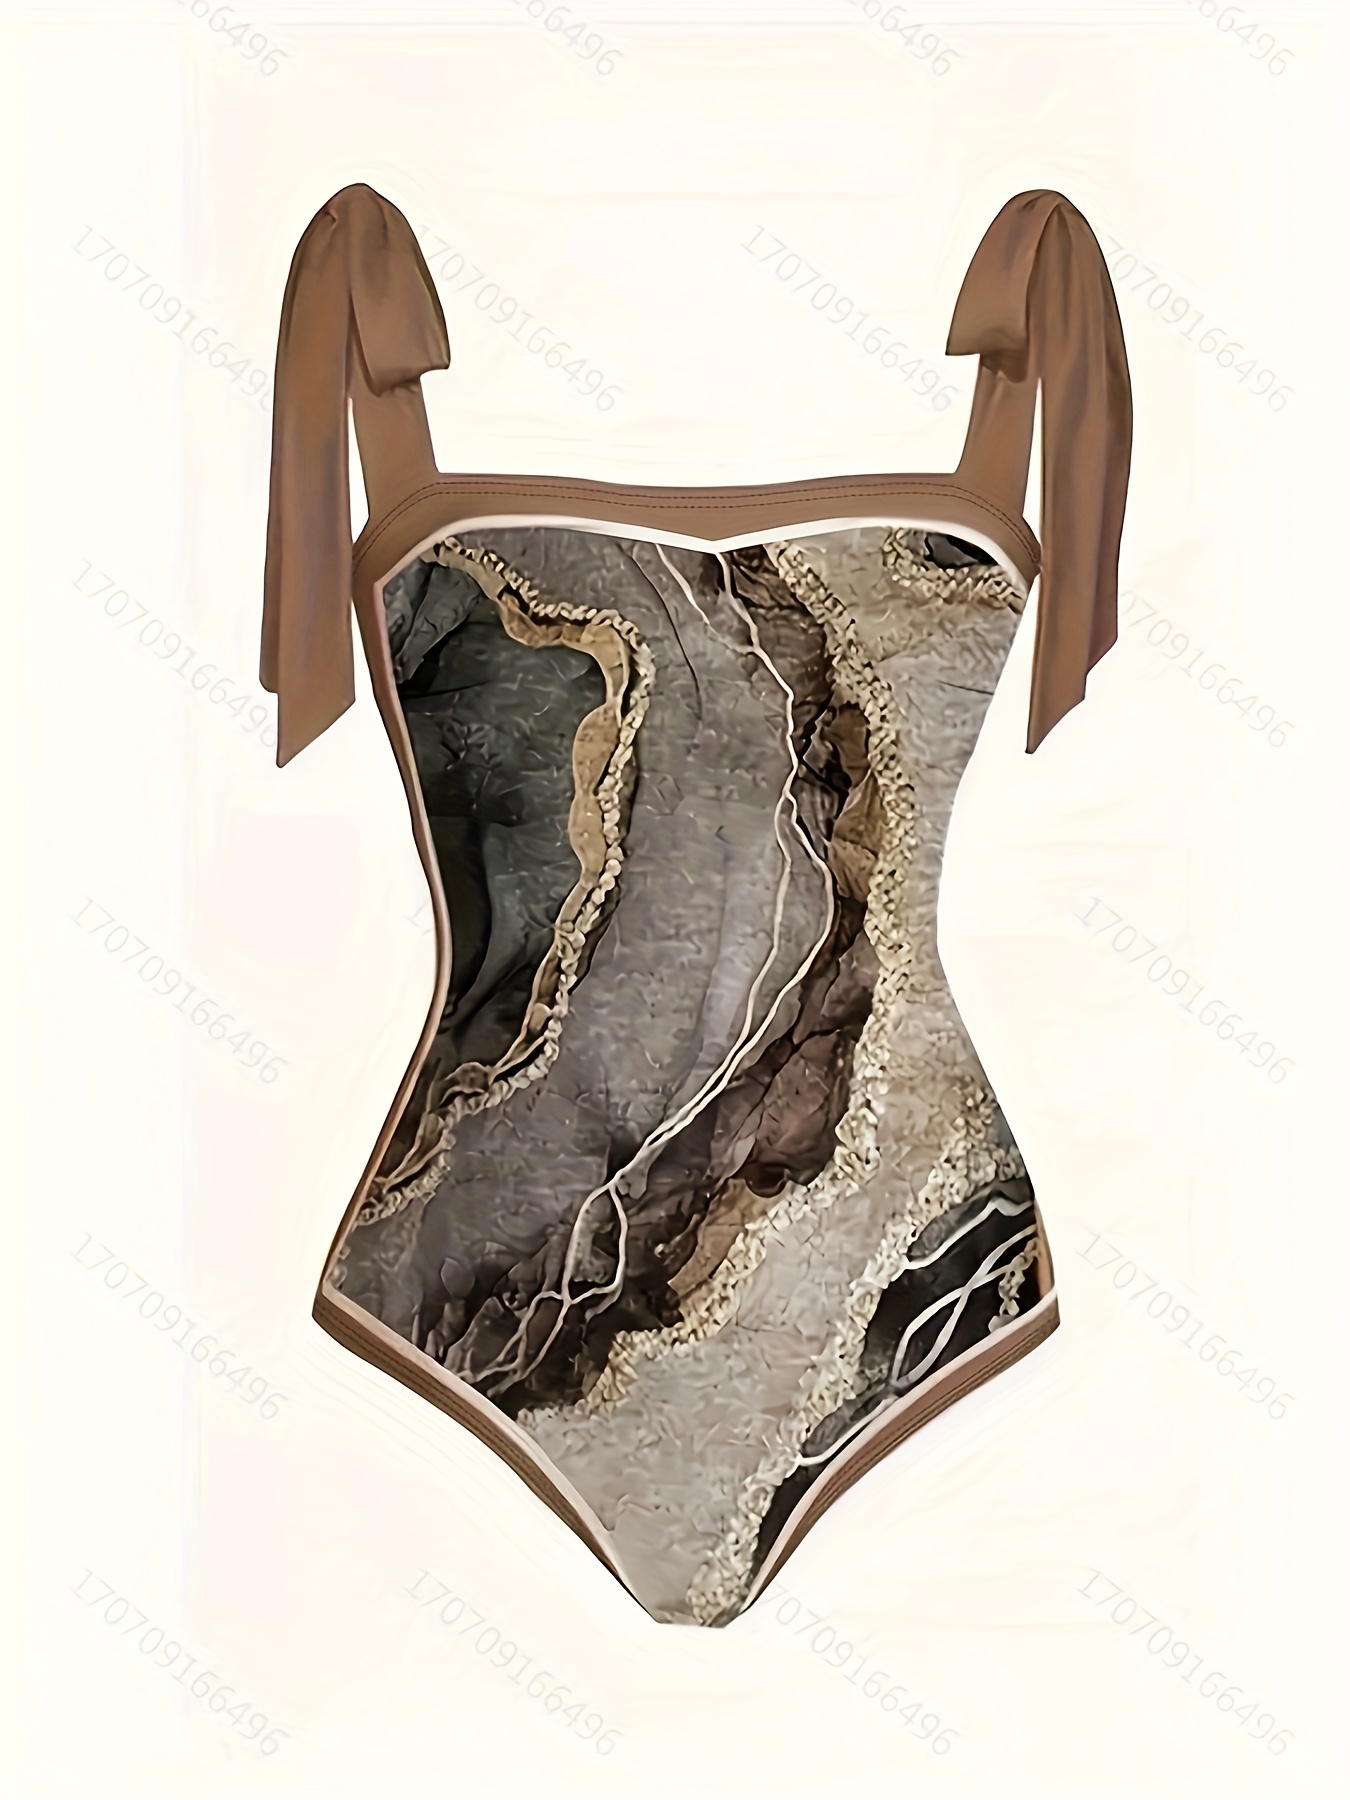 2pieces Swimsuit Wrap Bathing Suit Lady Swimwear Beach-costume Thong Bathing